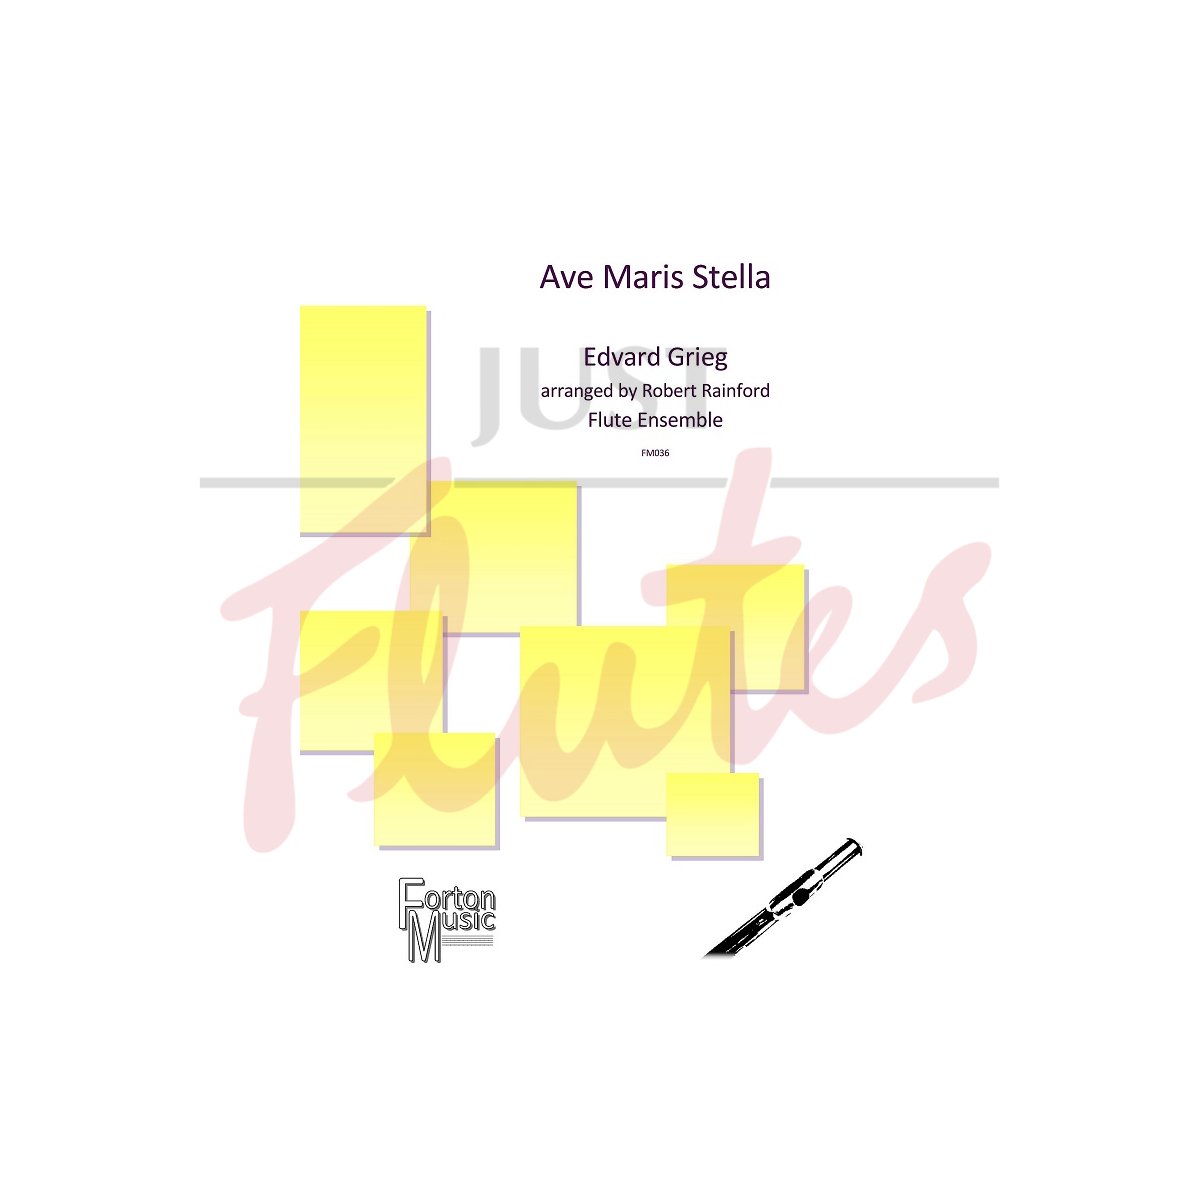 Ave Maris Stella (Hail, Bright Star of Heaven) for Flute Ensemble